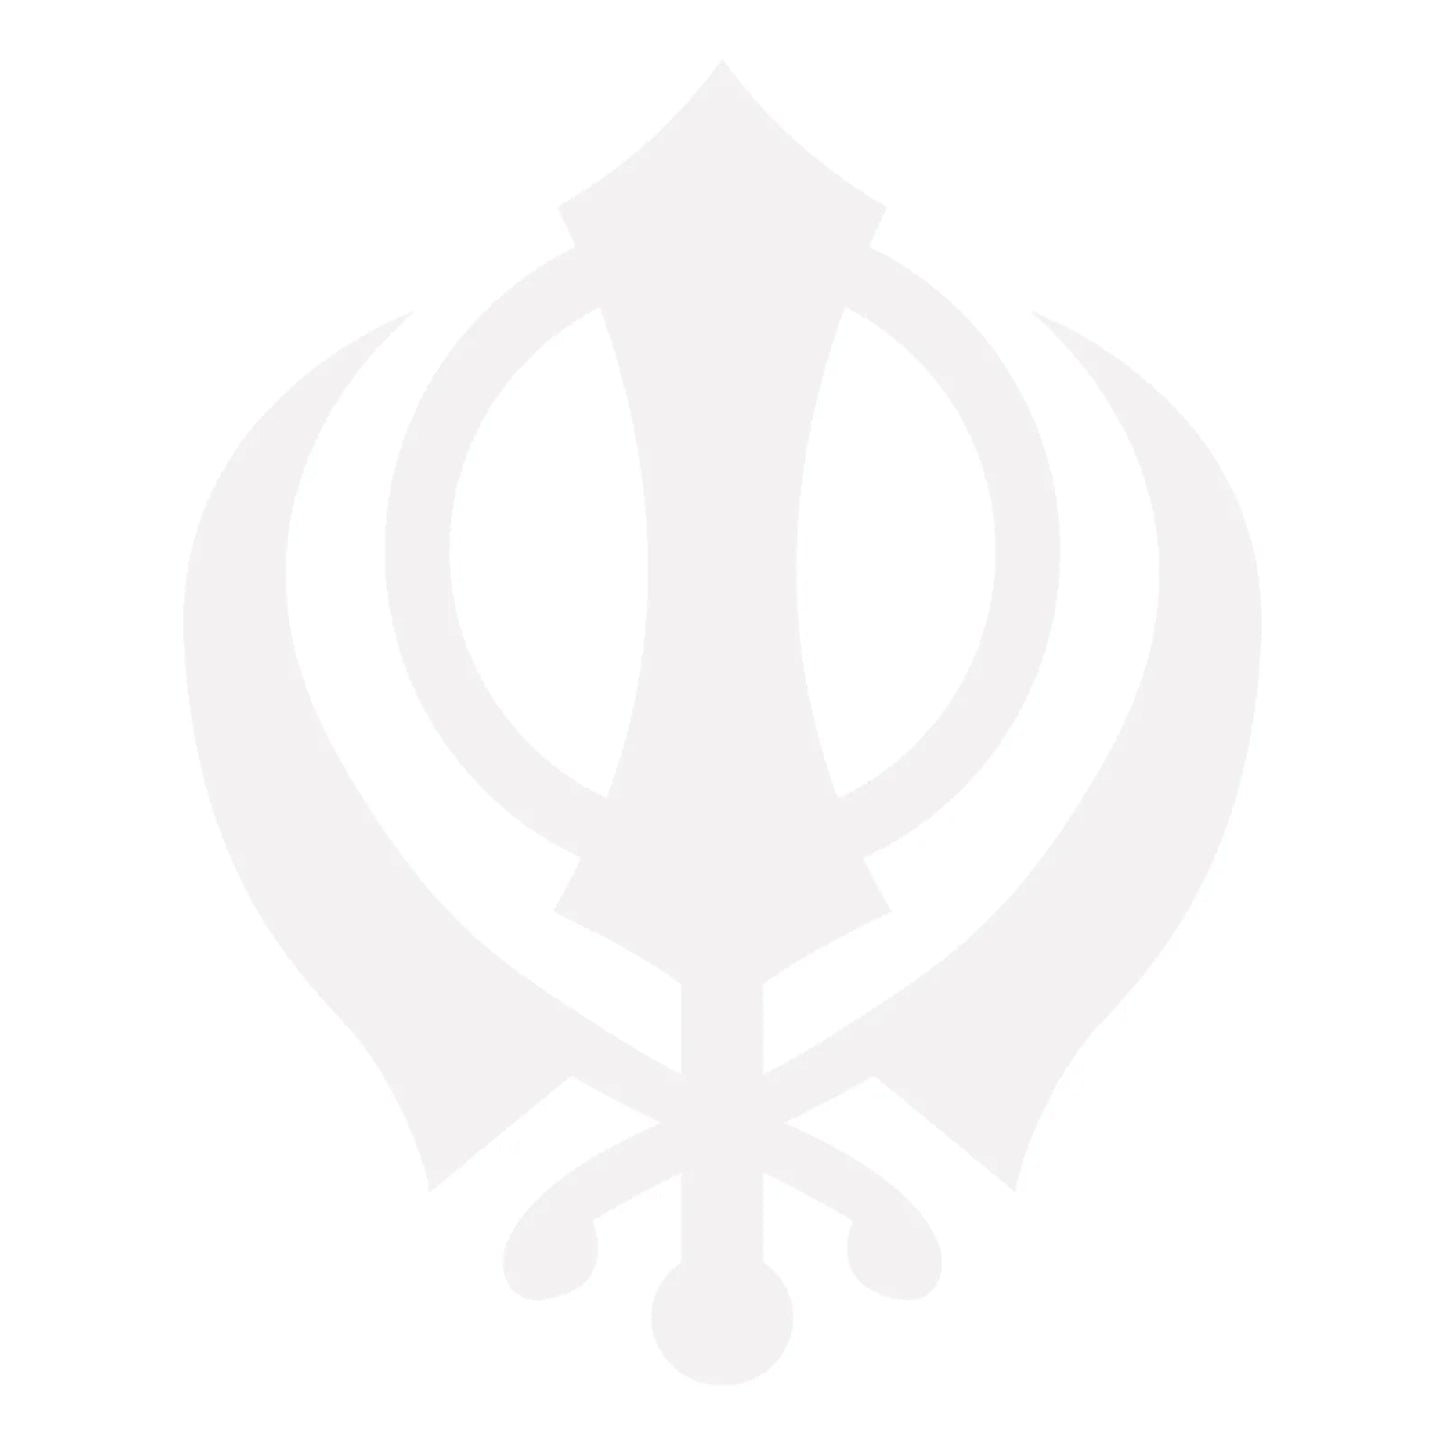 Sikh Khanda Window Sticker in White